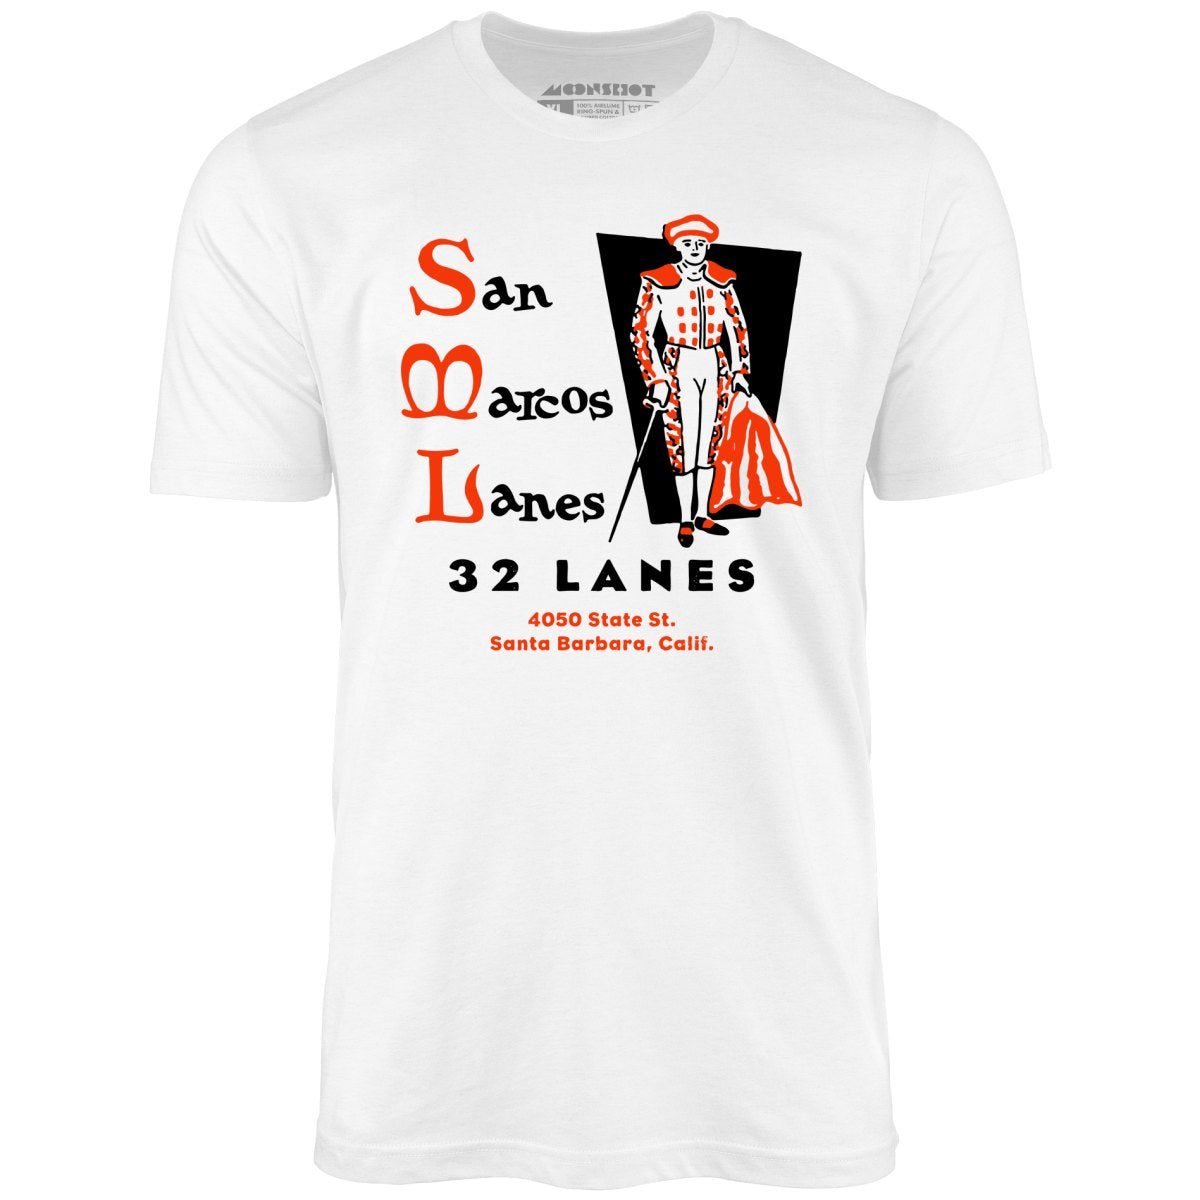 San Marcos Lanes - Santa Barbara, CA - Vintage Bowling Alley - Unisex T-Shirt